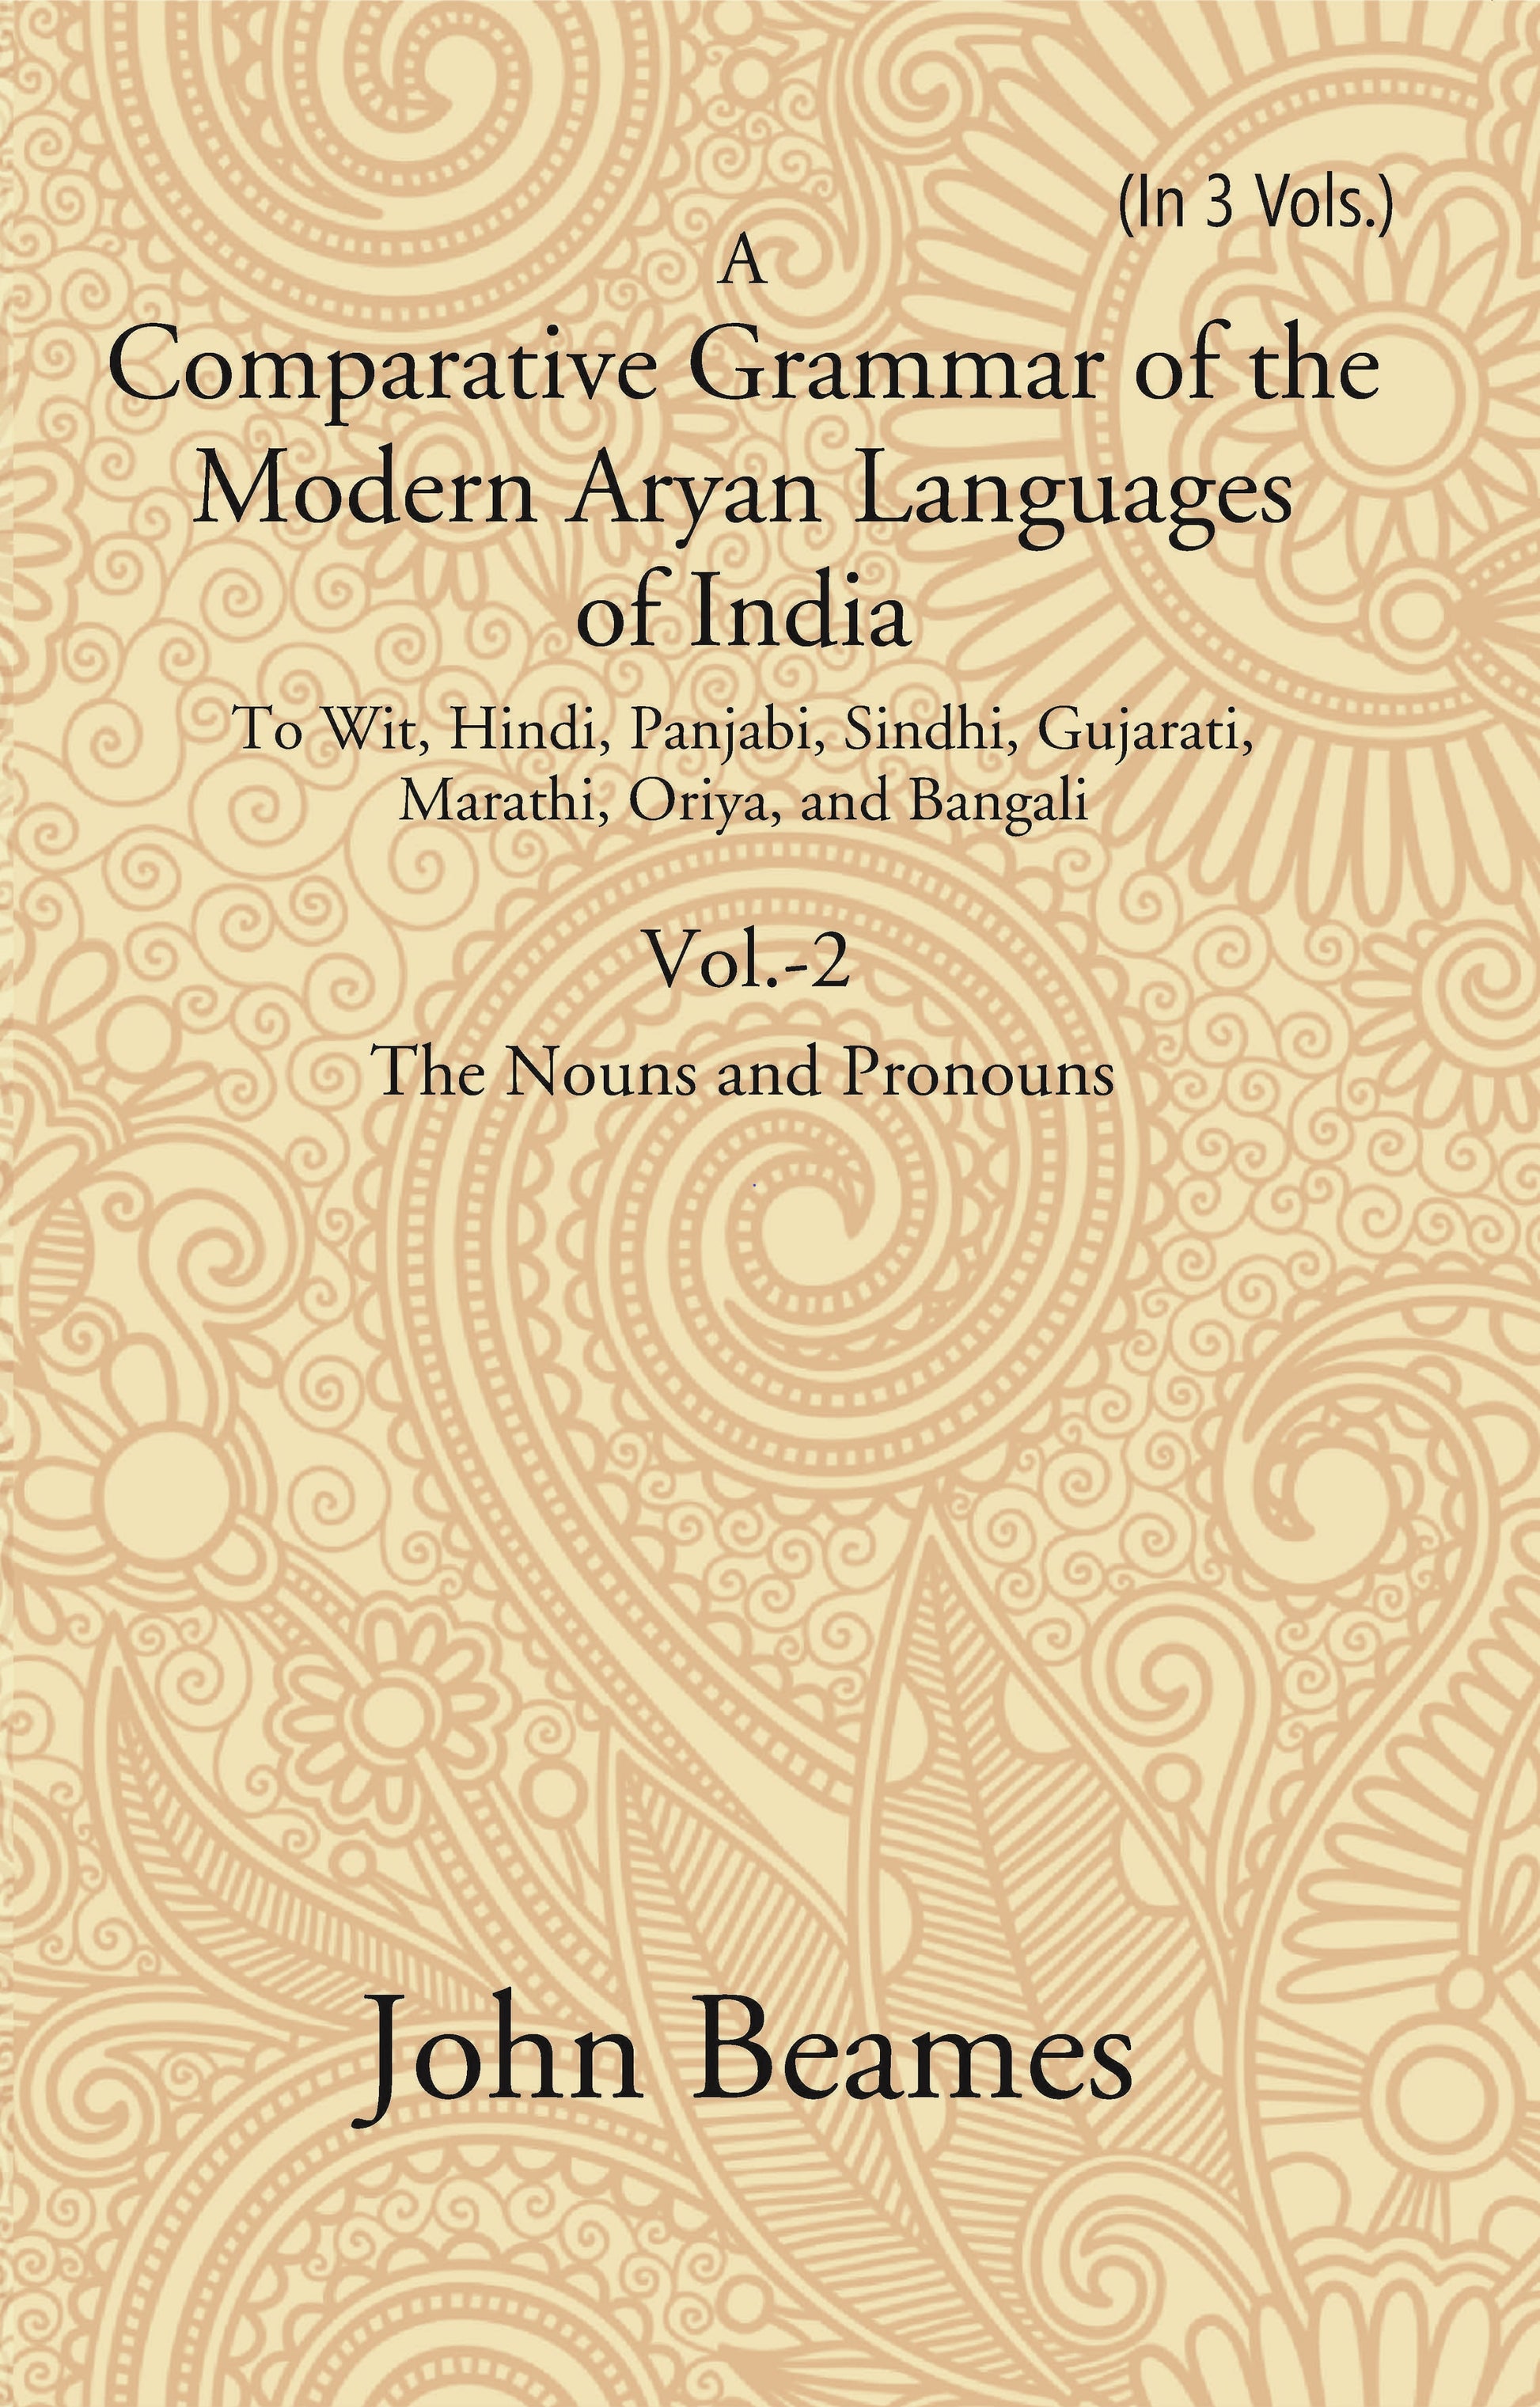 A Comparative Grammar of the Modern Aryan Languages of India: To Wit, Hindi, Panjabi, Sindhi, Gujarati, Marathi, Oriya, and Bangali (The Noun and Pronoun) Volume 2nd